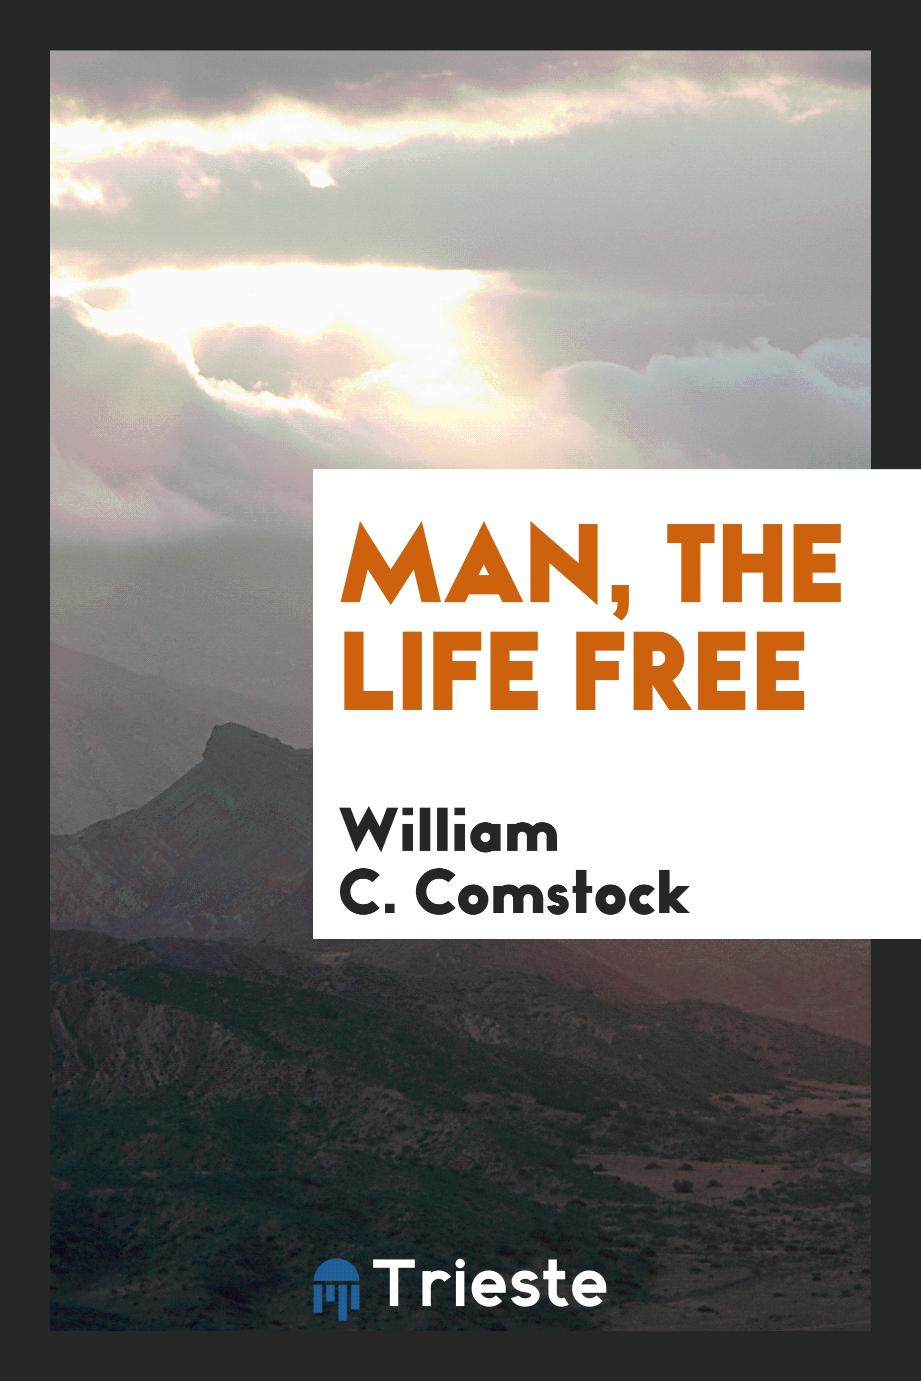 Man, the life free